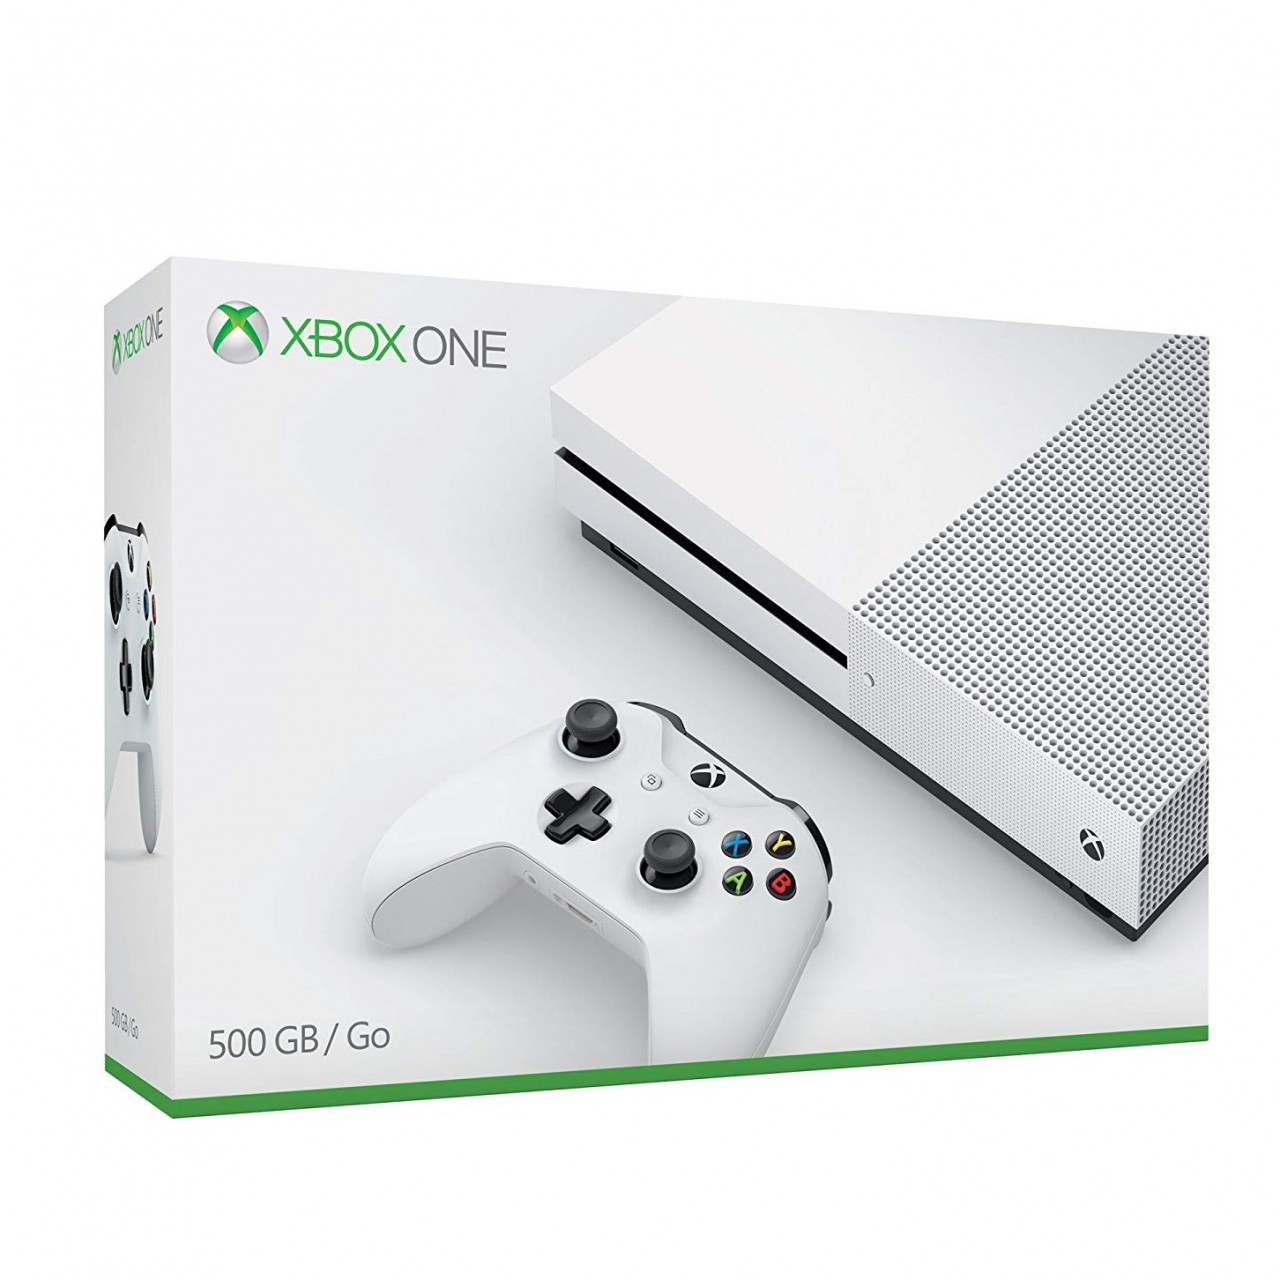 8. Microsoft Xbox One S Console – 500 GB Storage – Stream 4K Content